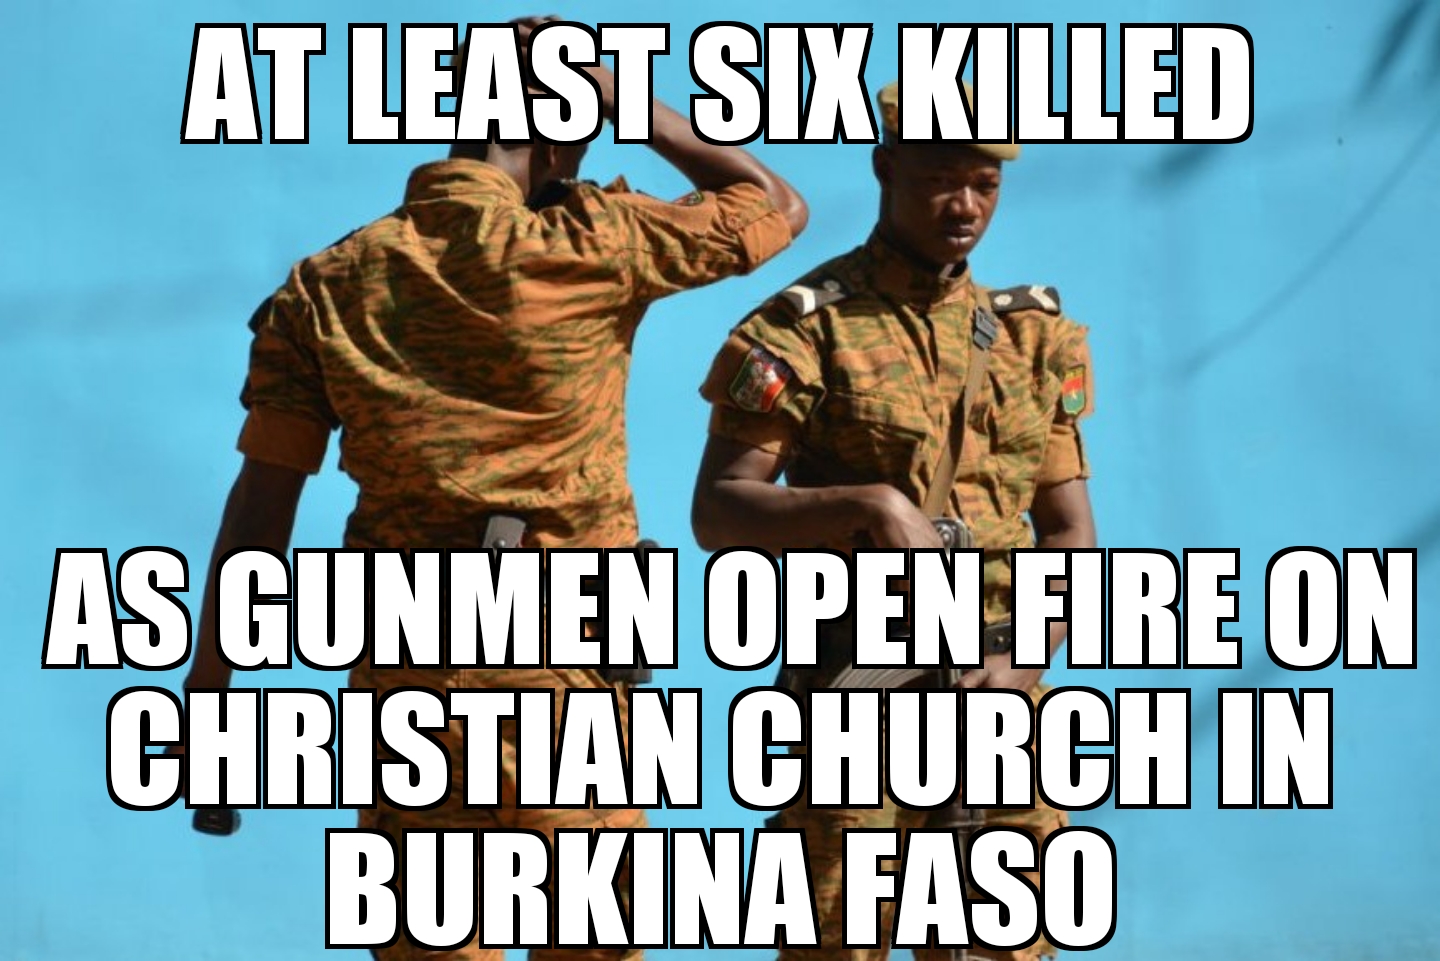 Burkina Faso church shooting